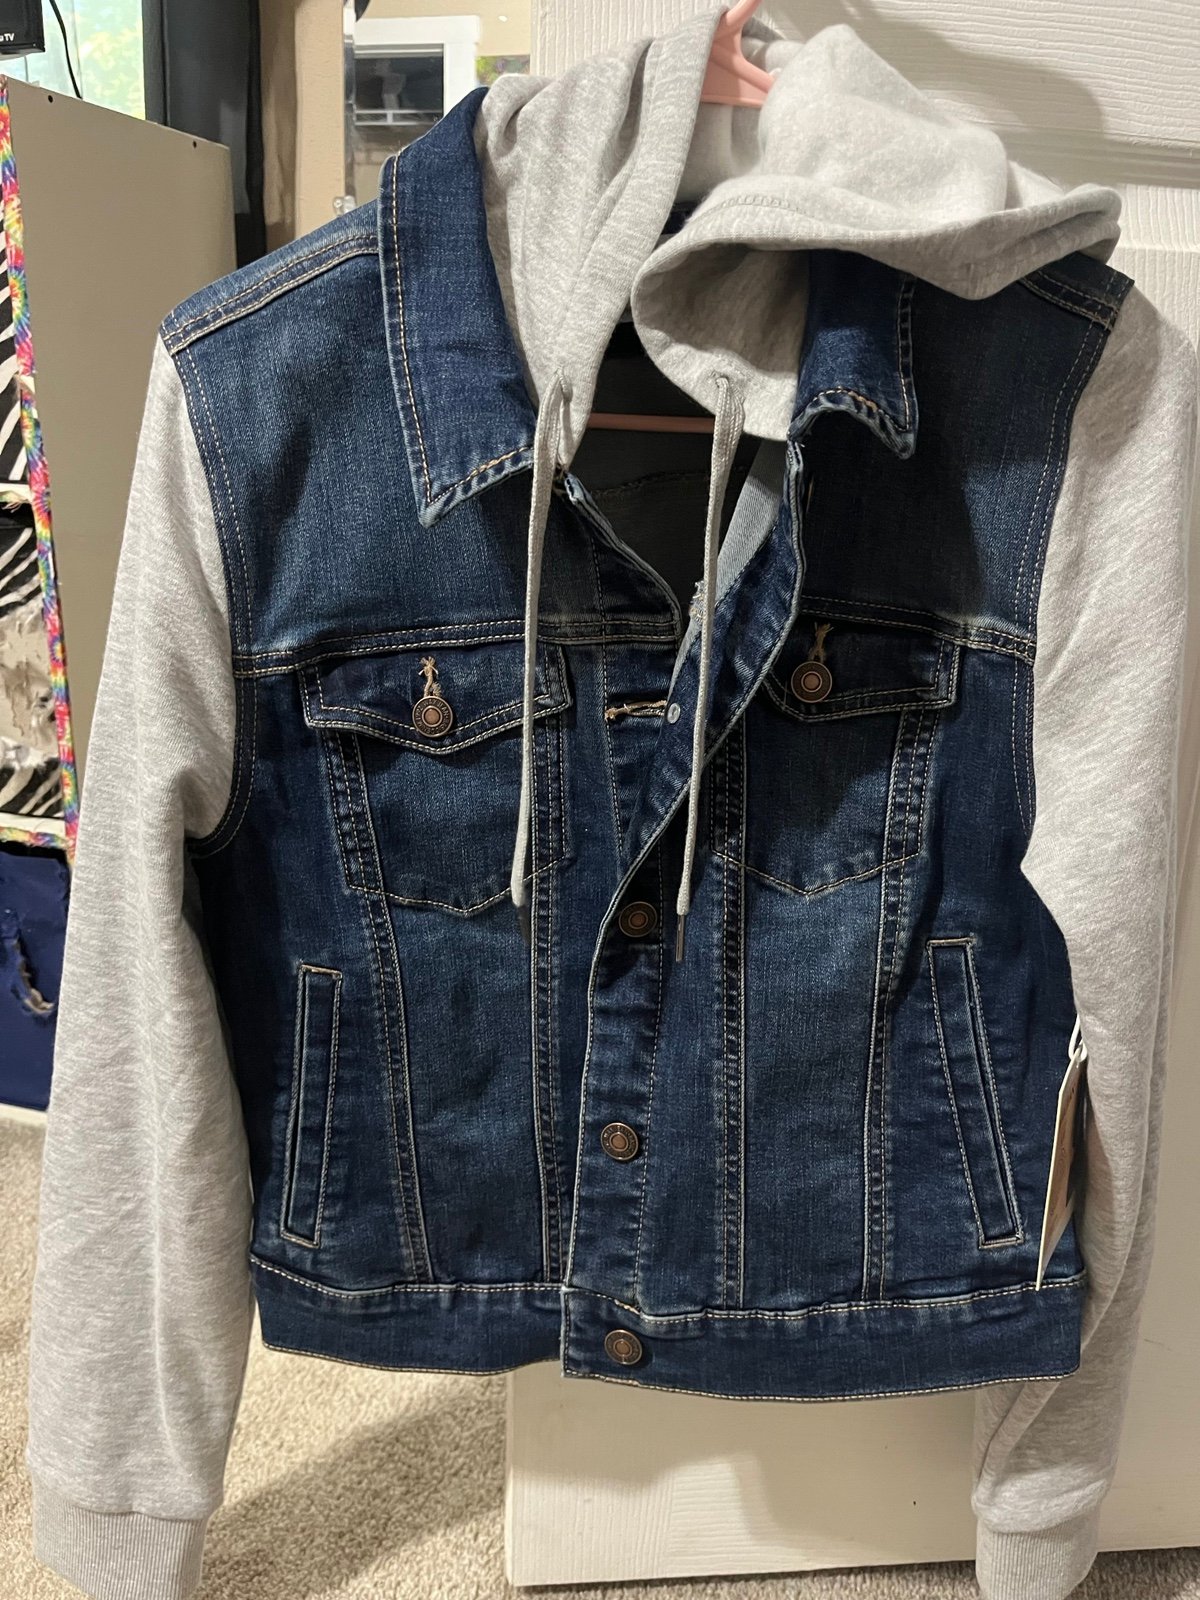 Wholesale price Denim Jean jacket ofivO9R1S well sale